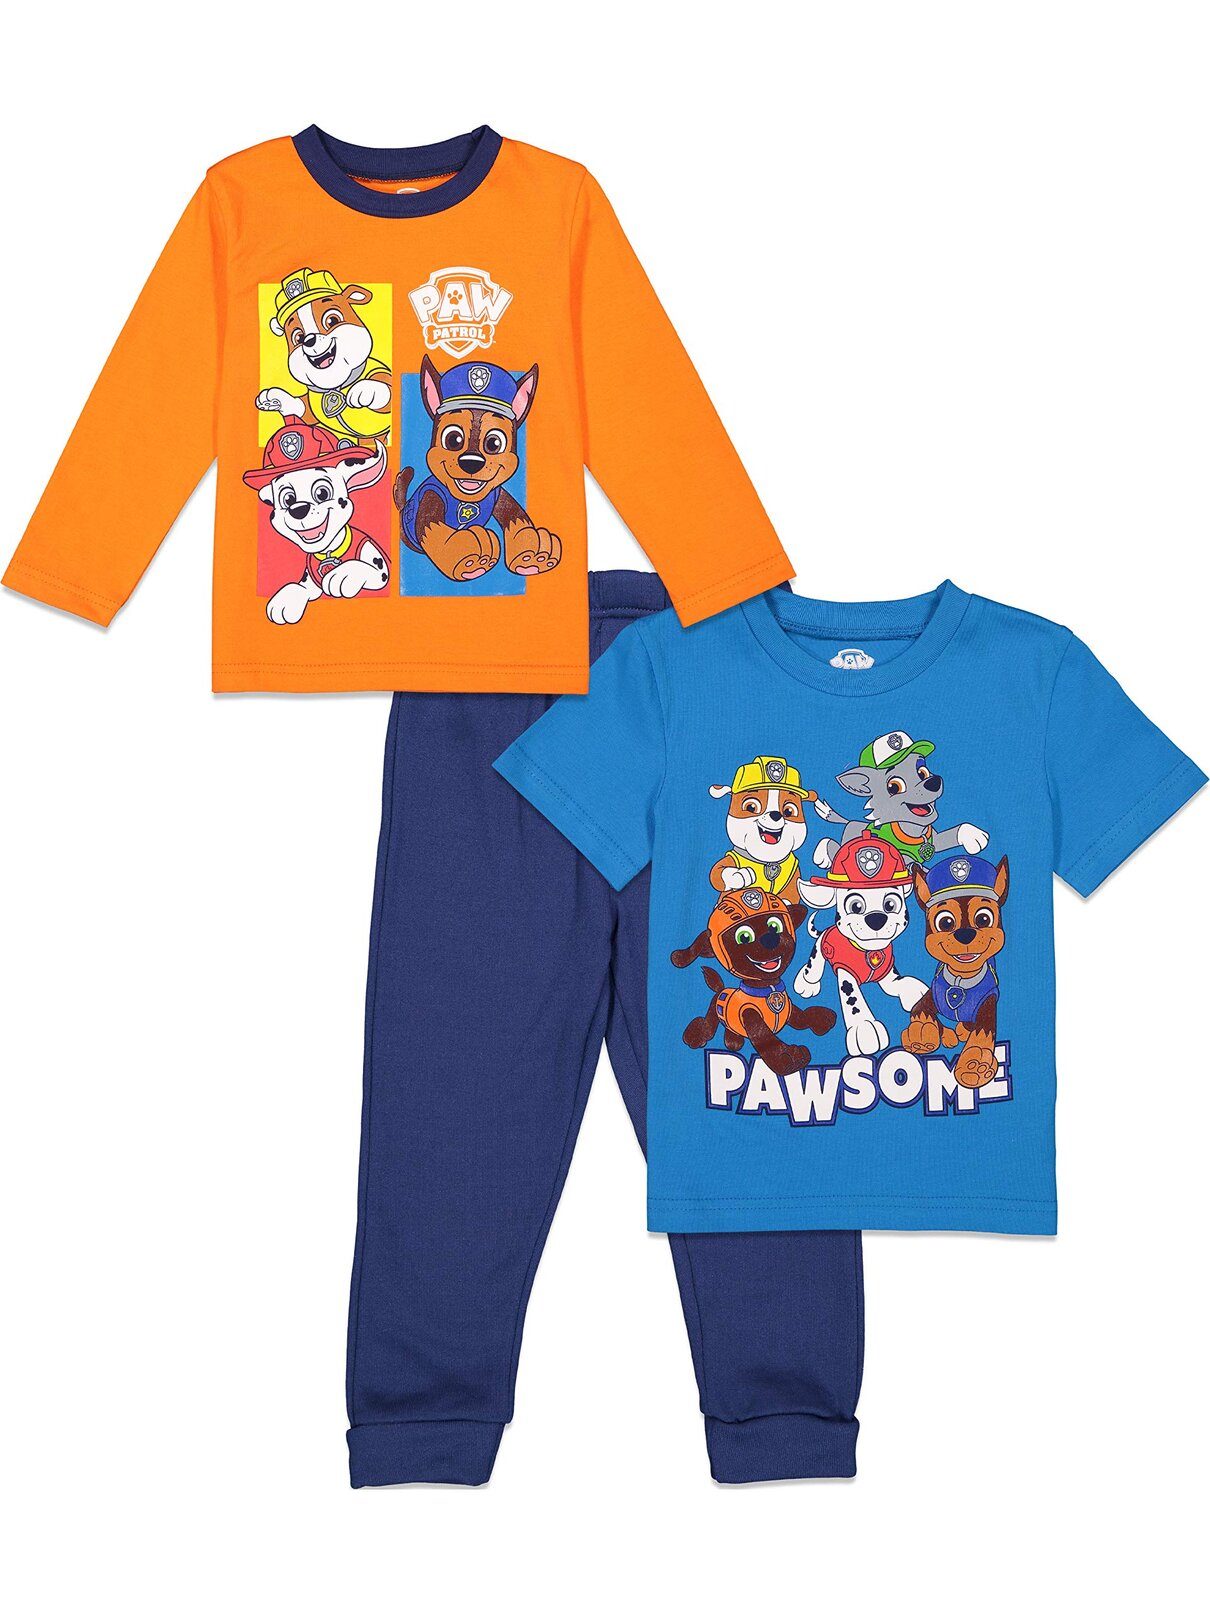 Paw Patrol T-Shirt and Fleece Pants 3 Piece Outfit Set